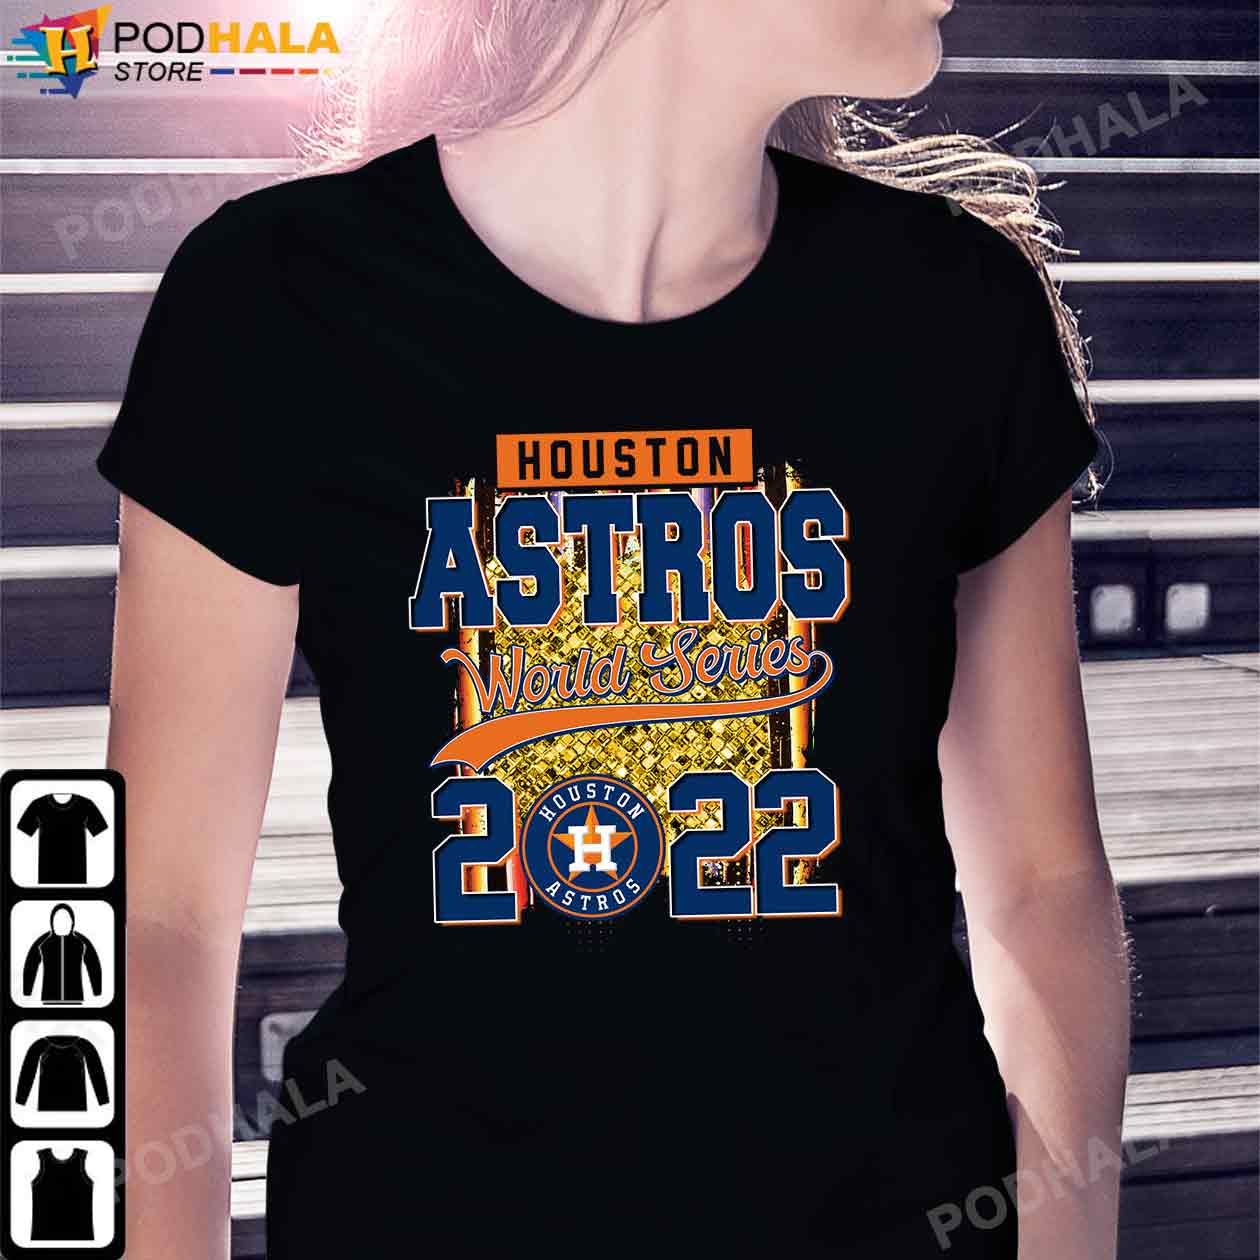 houston astros new shirts